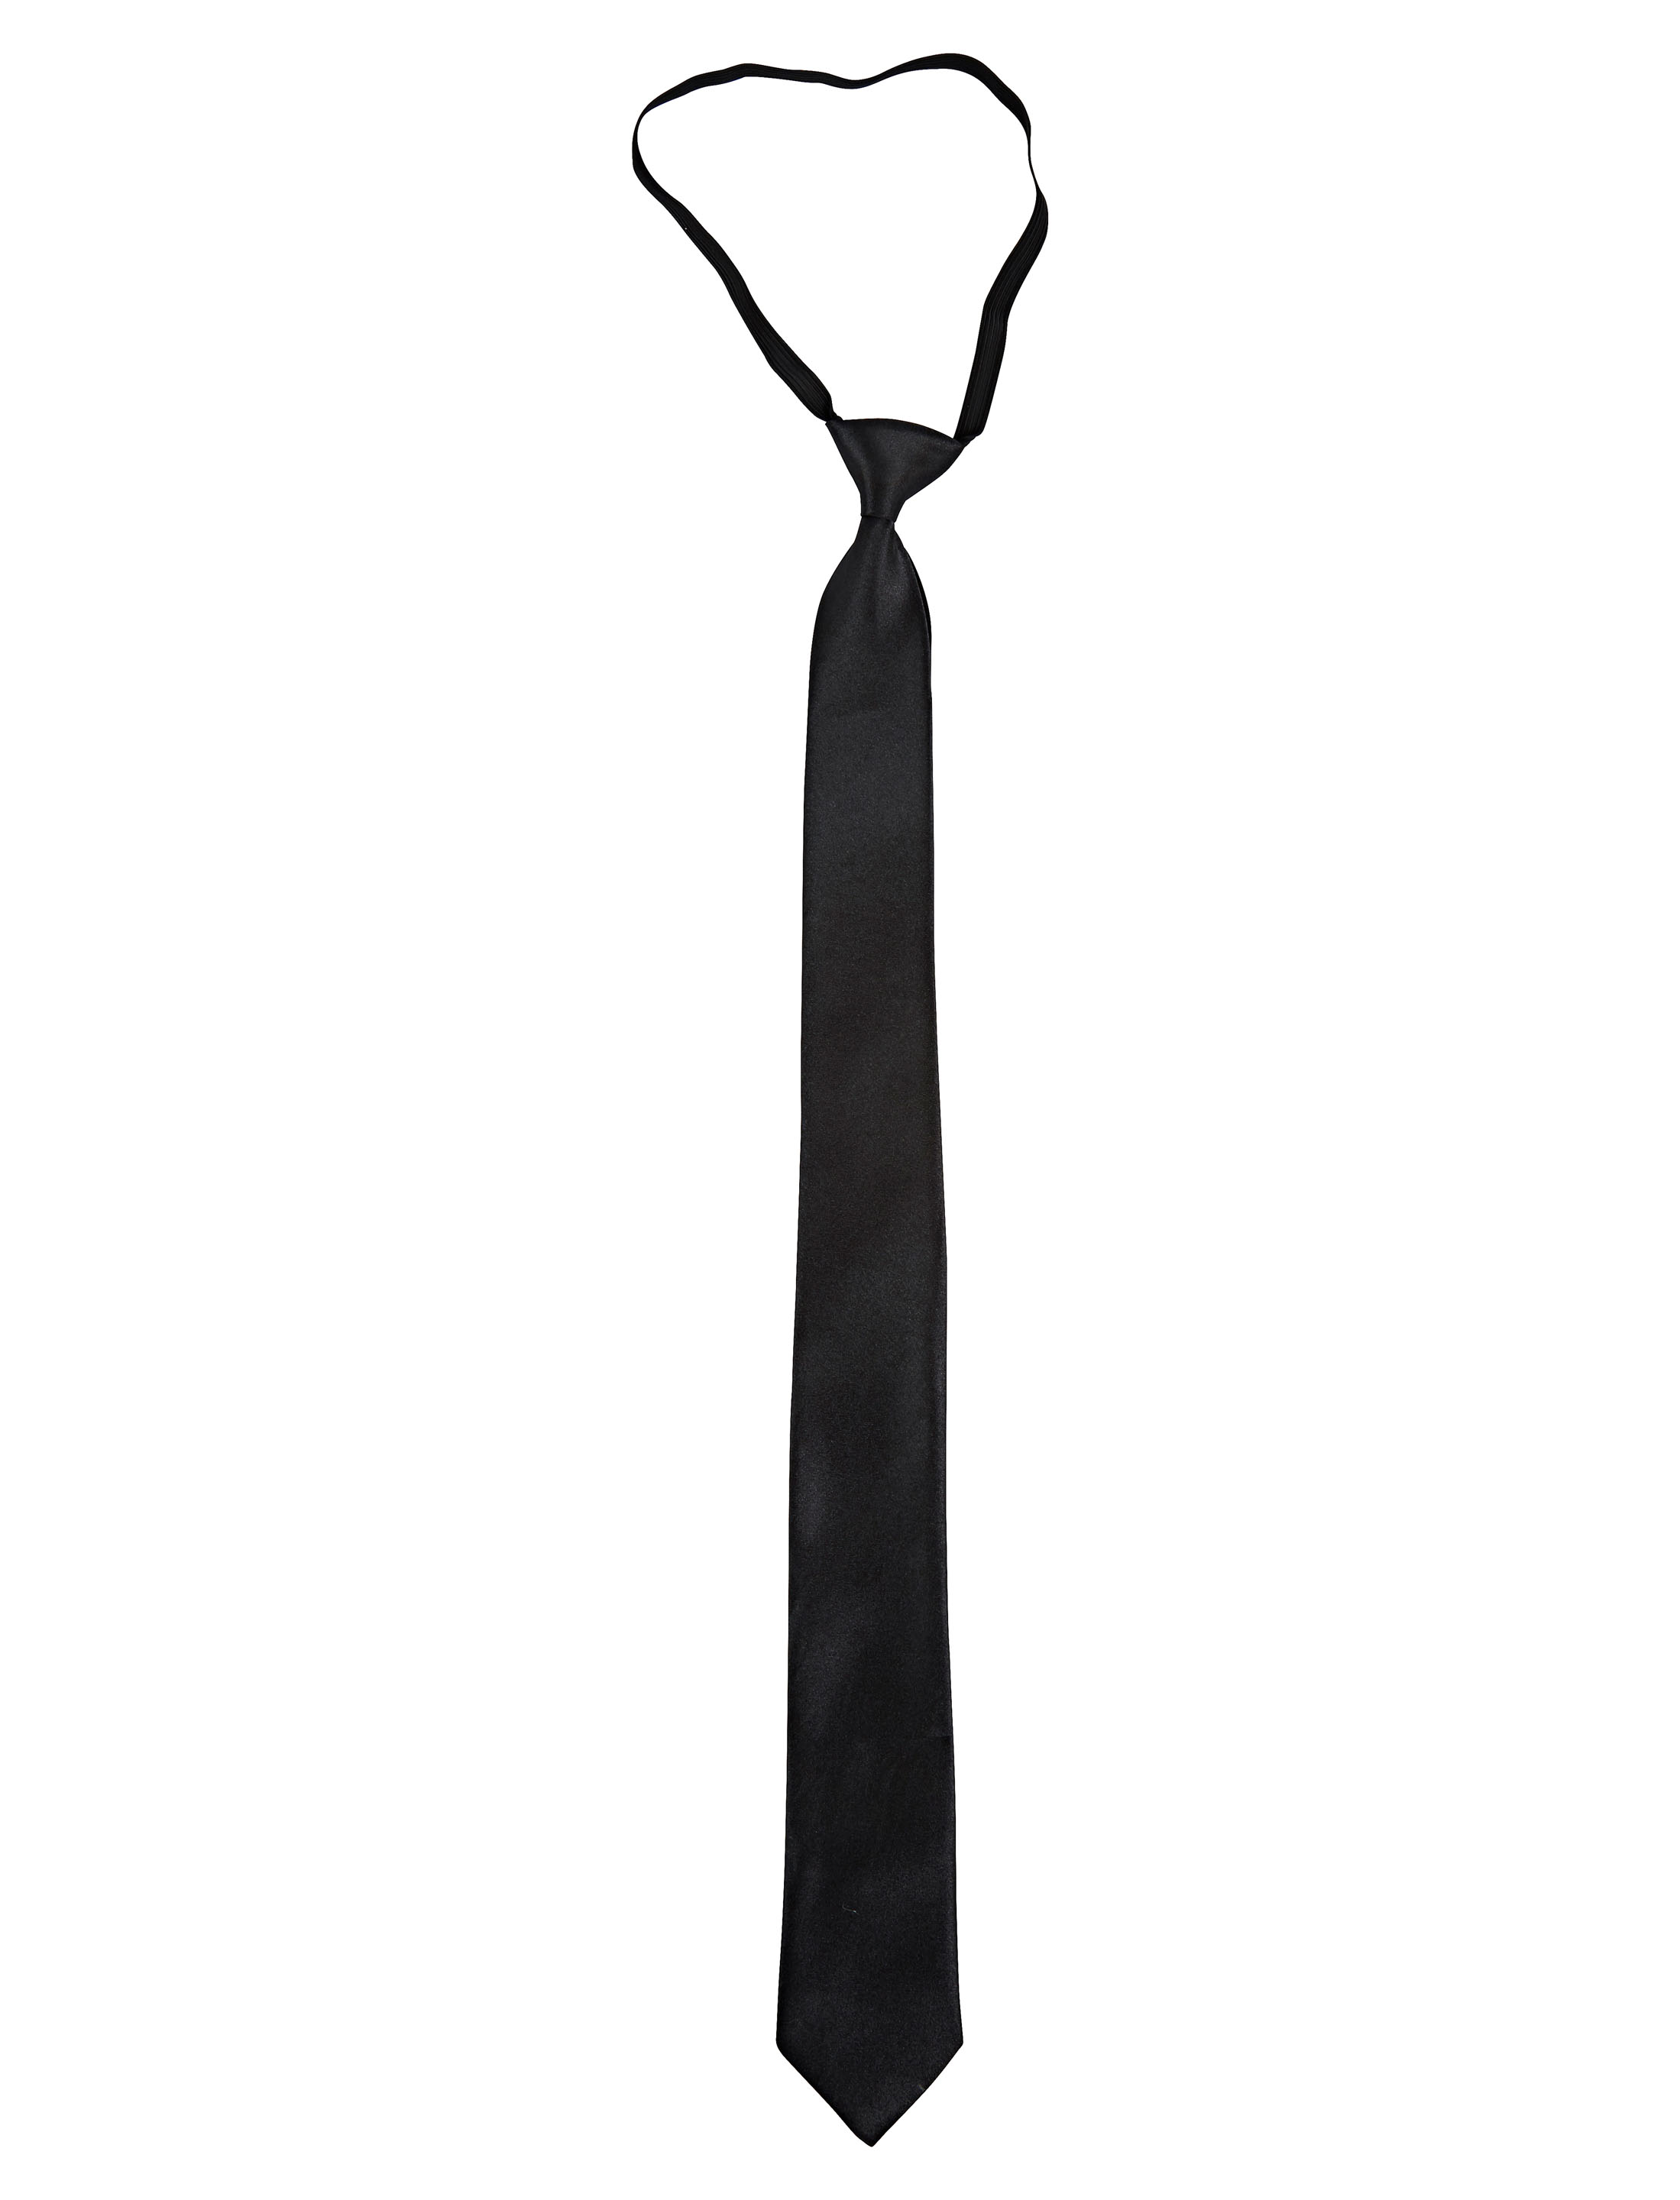 Krawatte shiny schwarz